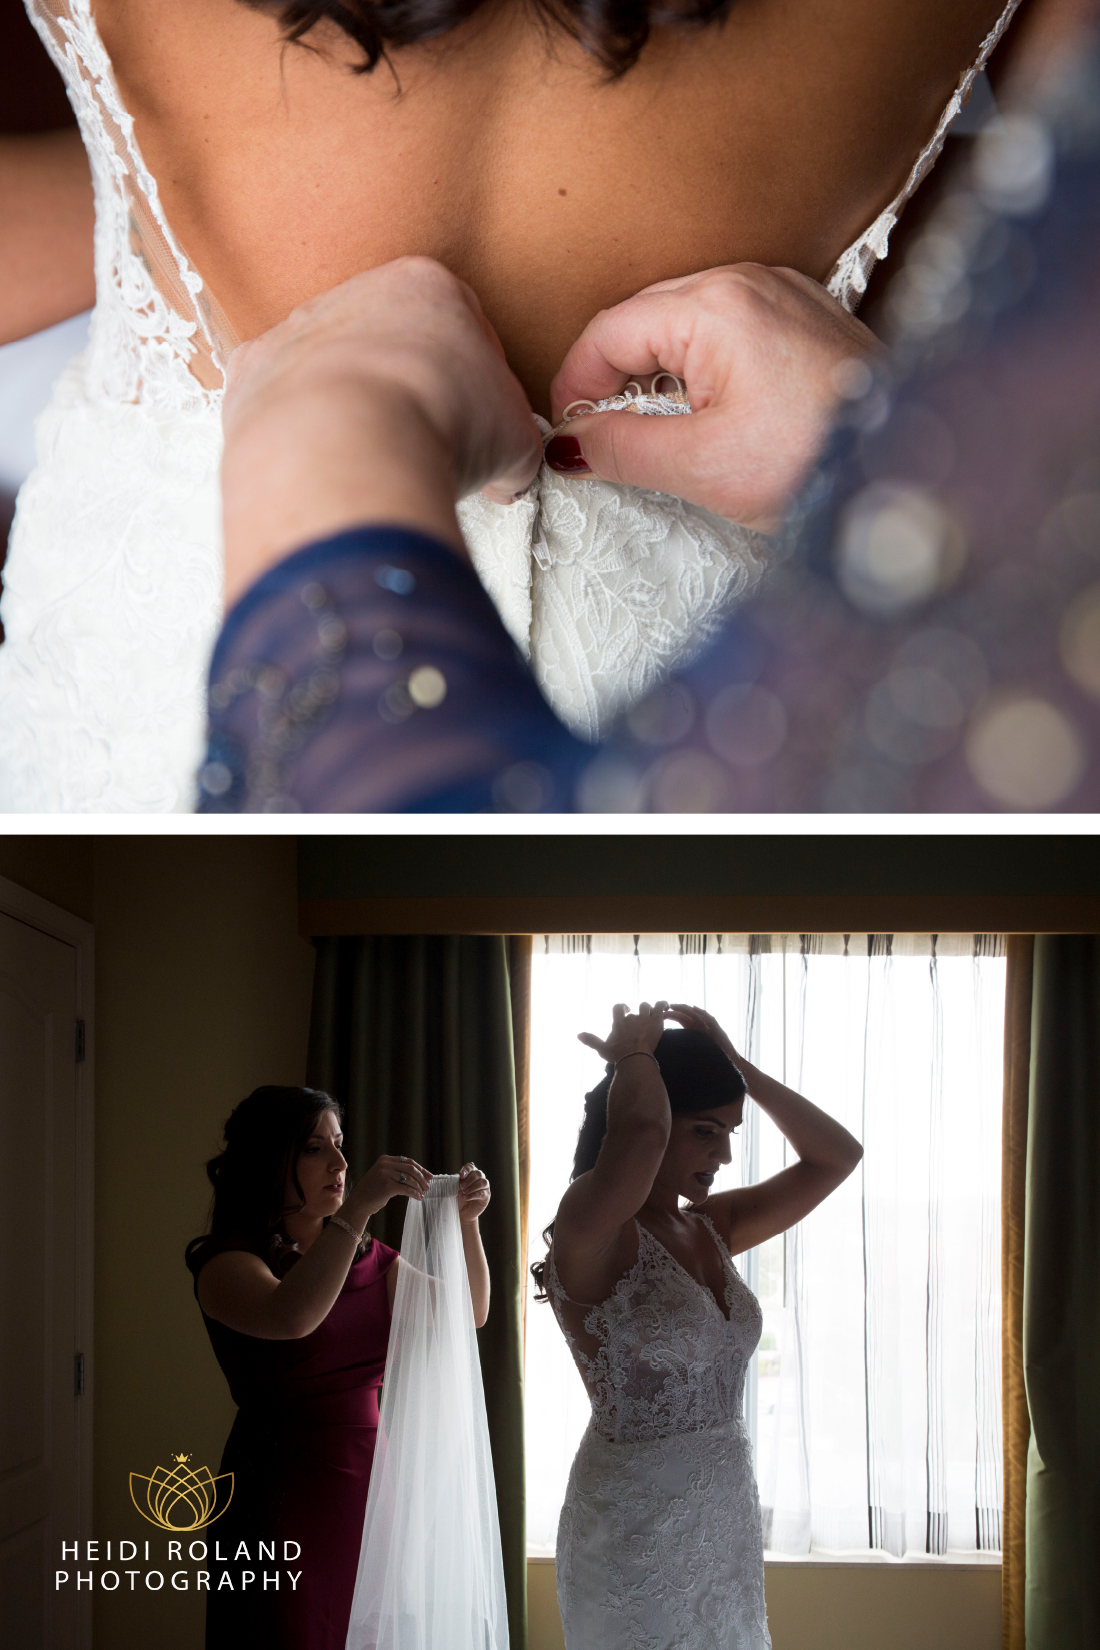 Bride putting on veil in hotel